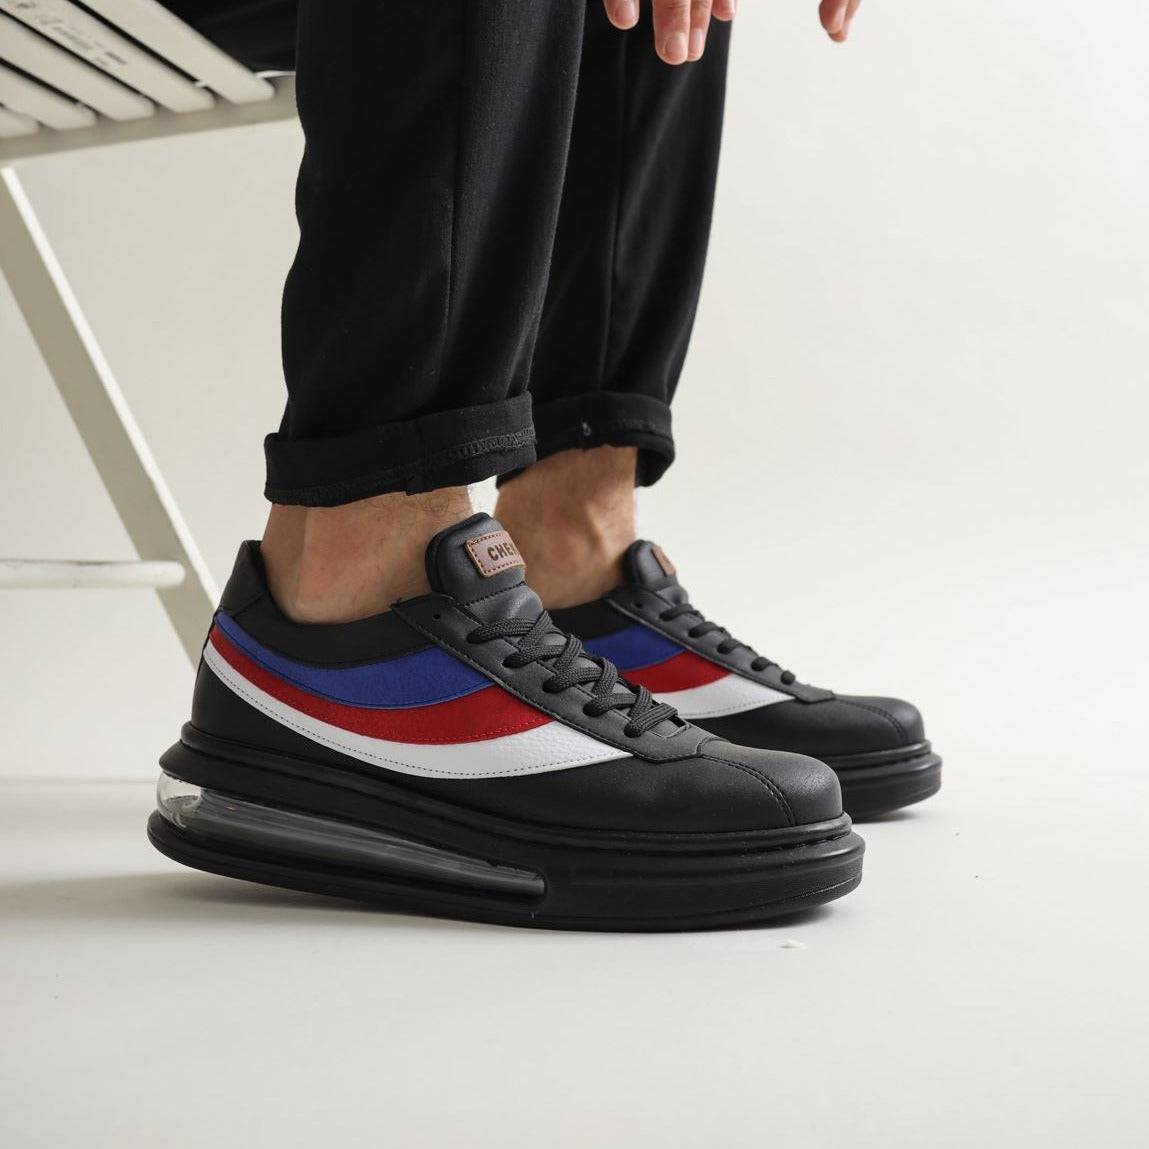 Casual Men's Sneakers With Air Soles by Apollo Moda | Espana Vibrant Echo